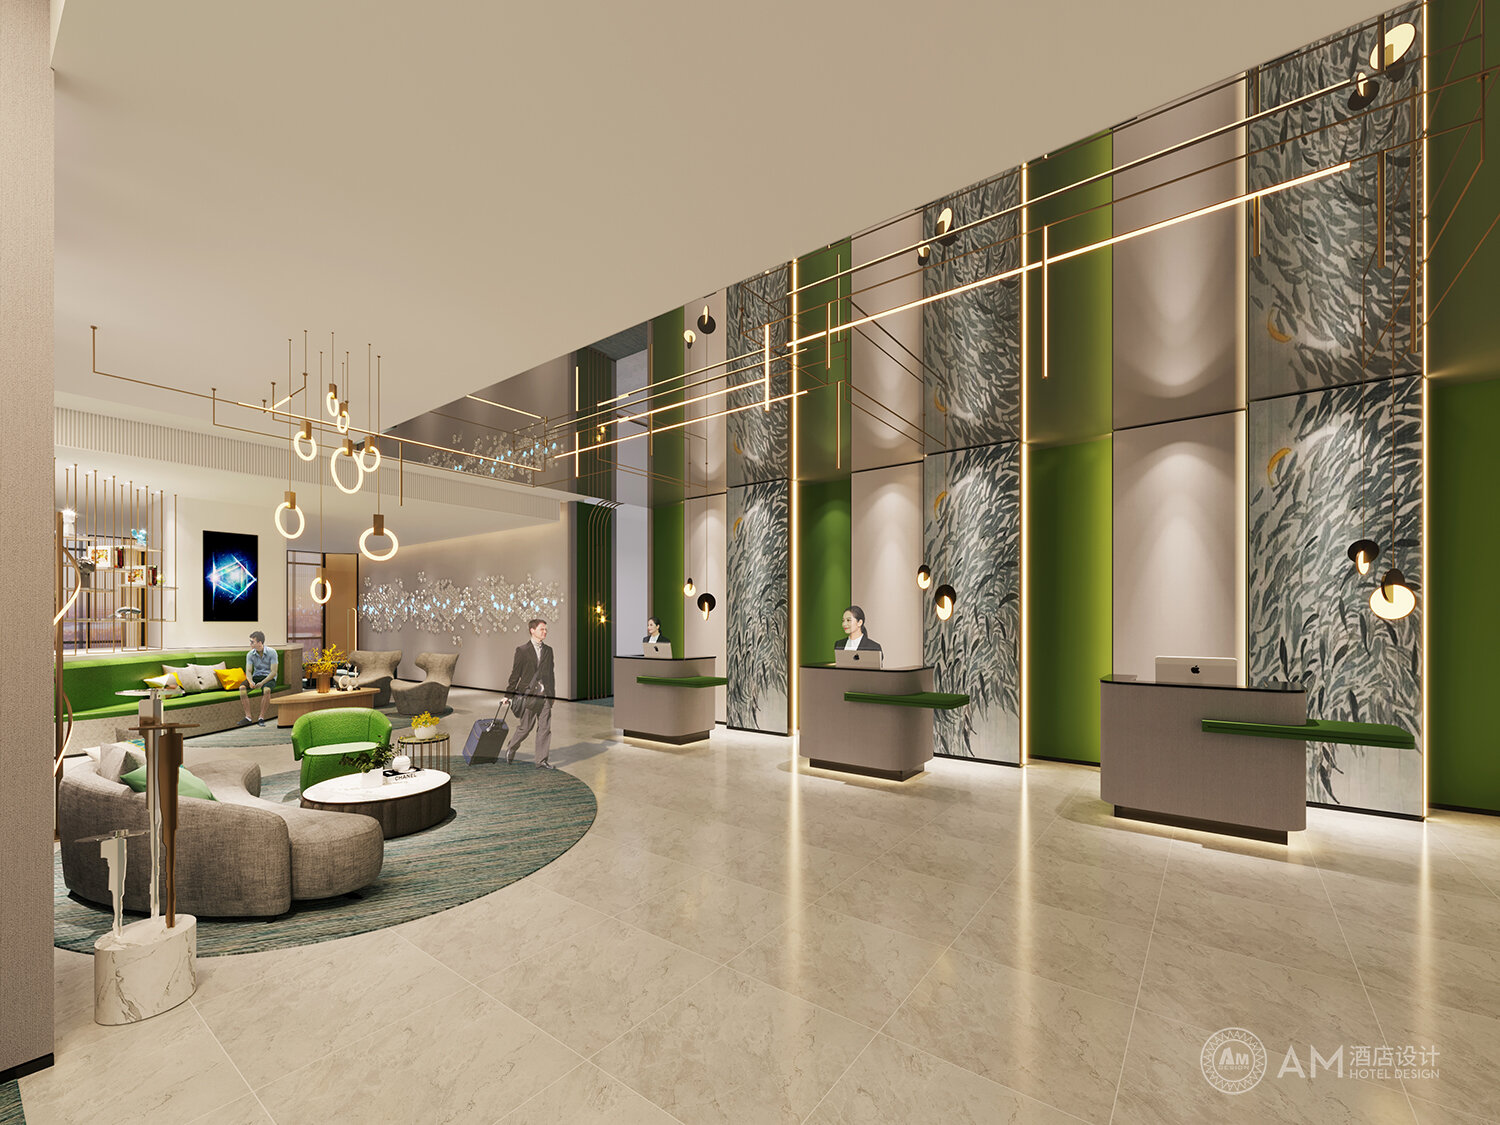 Am | Jianguo Hotel Design